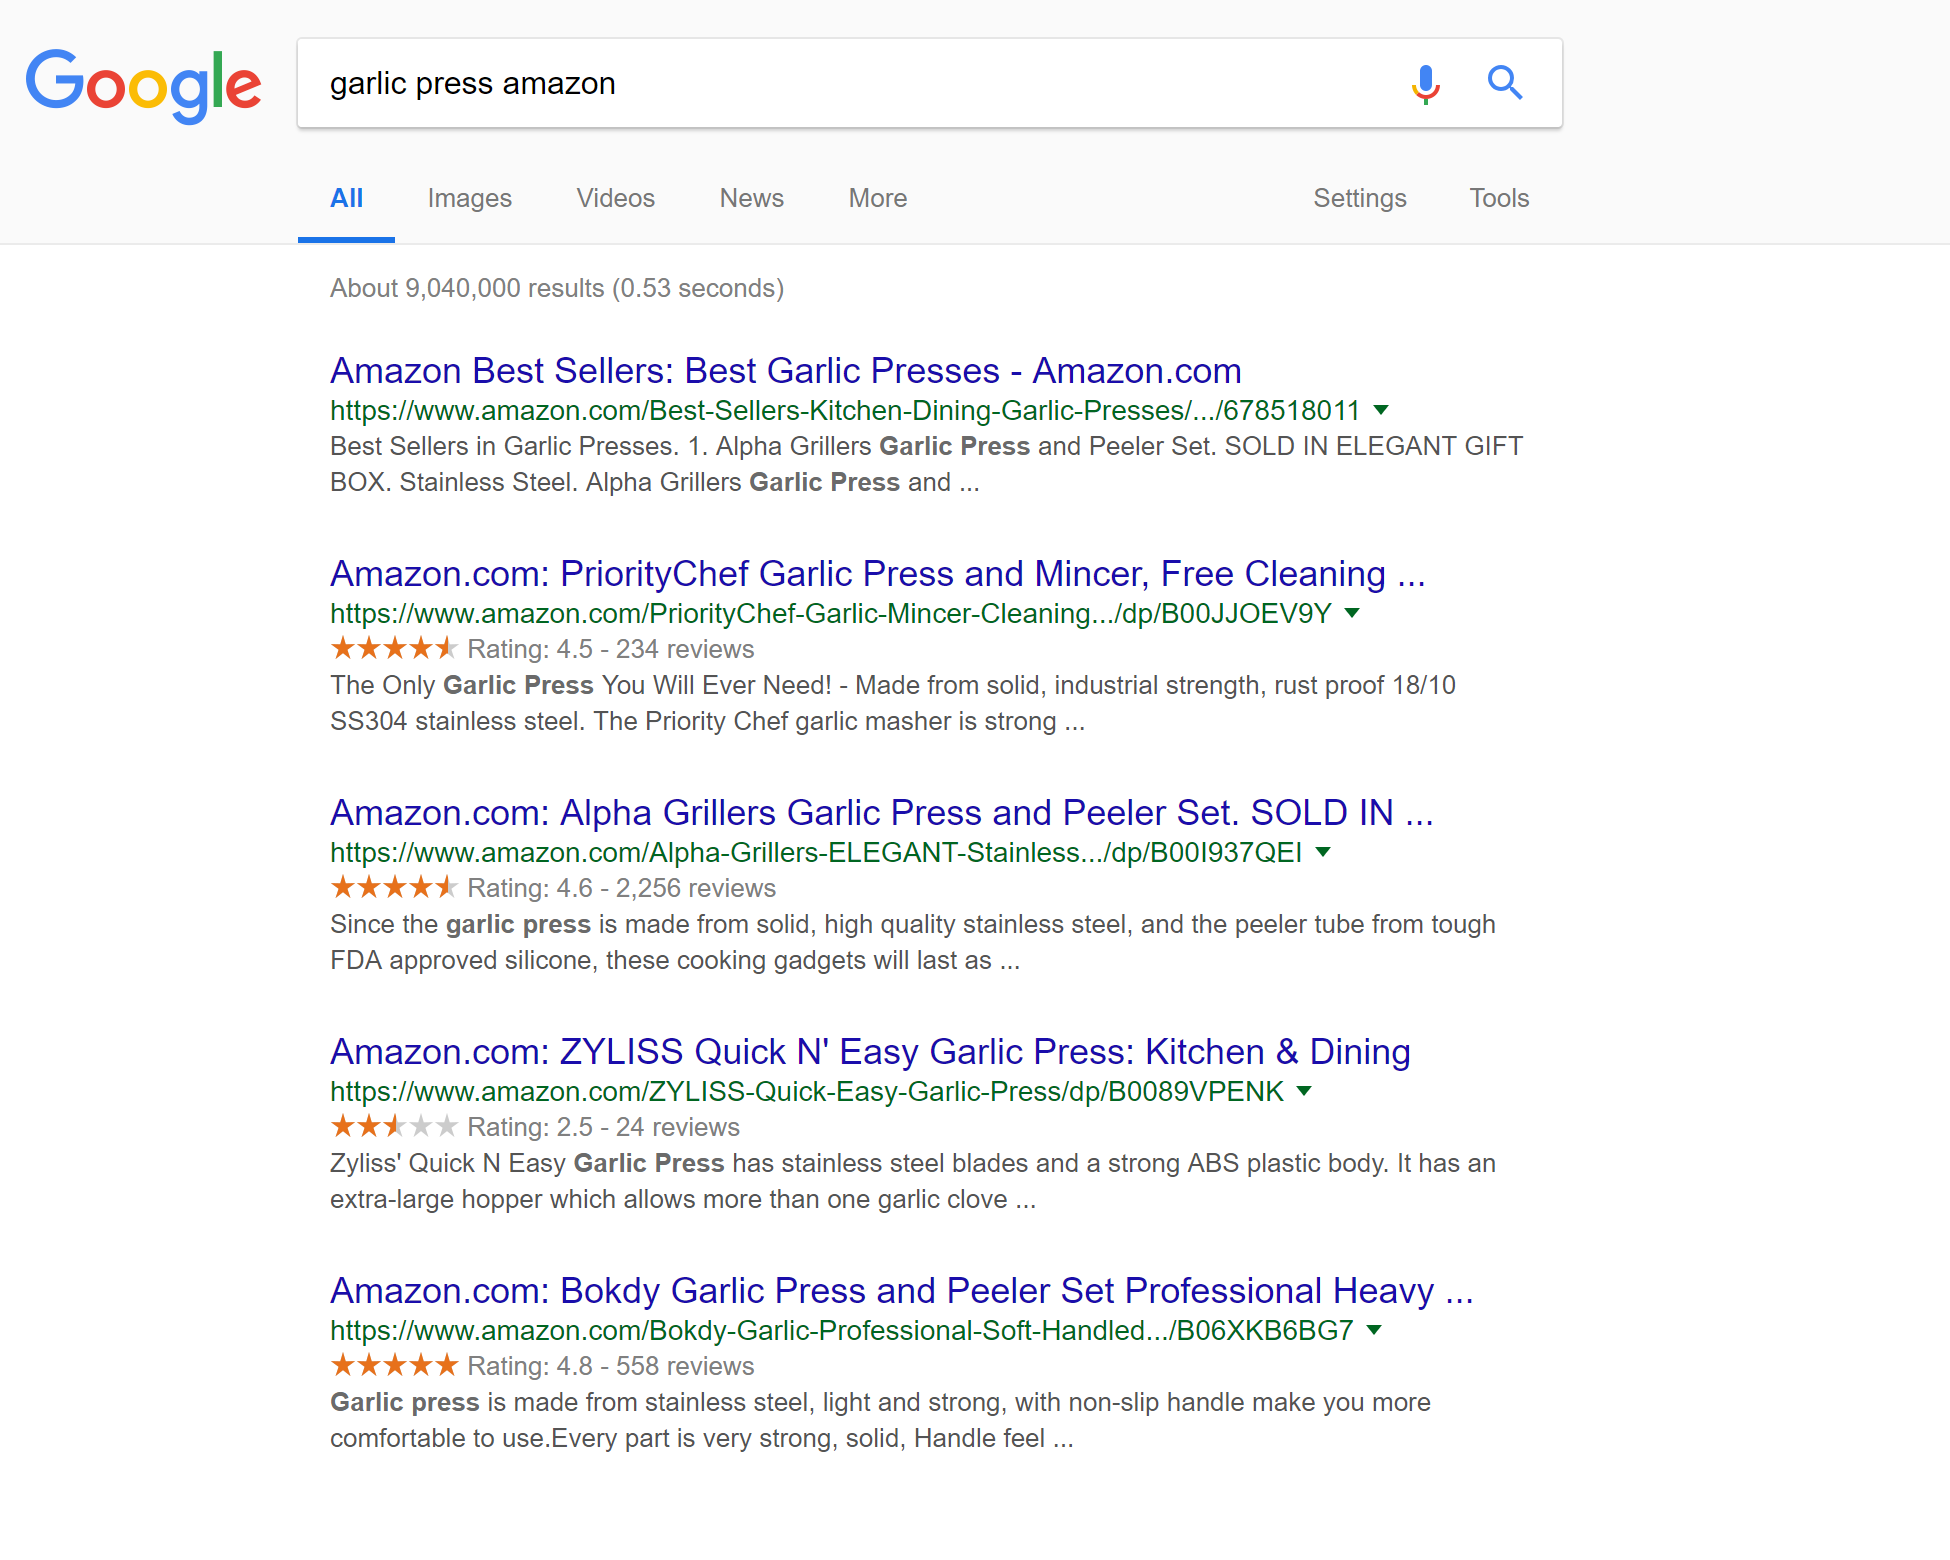 garlic-press-search-query-on-google